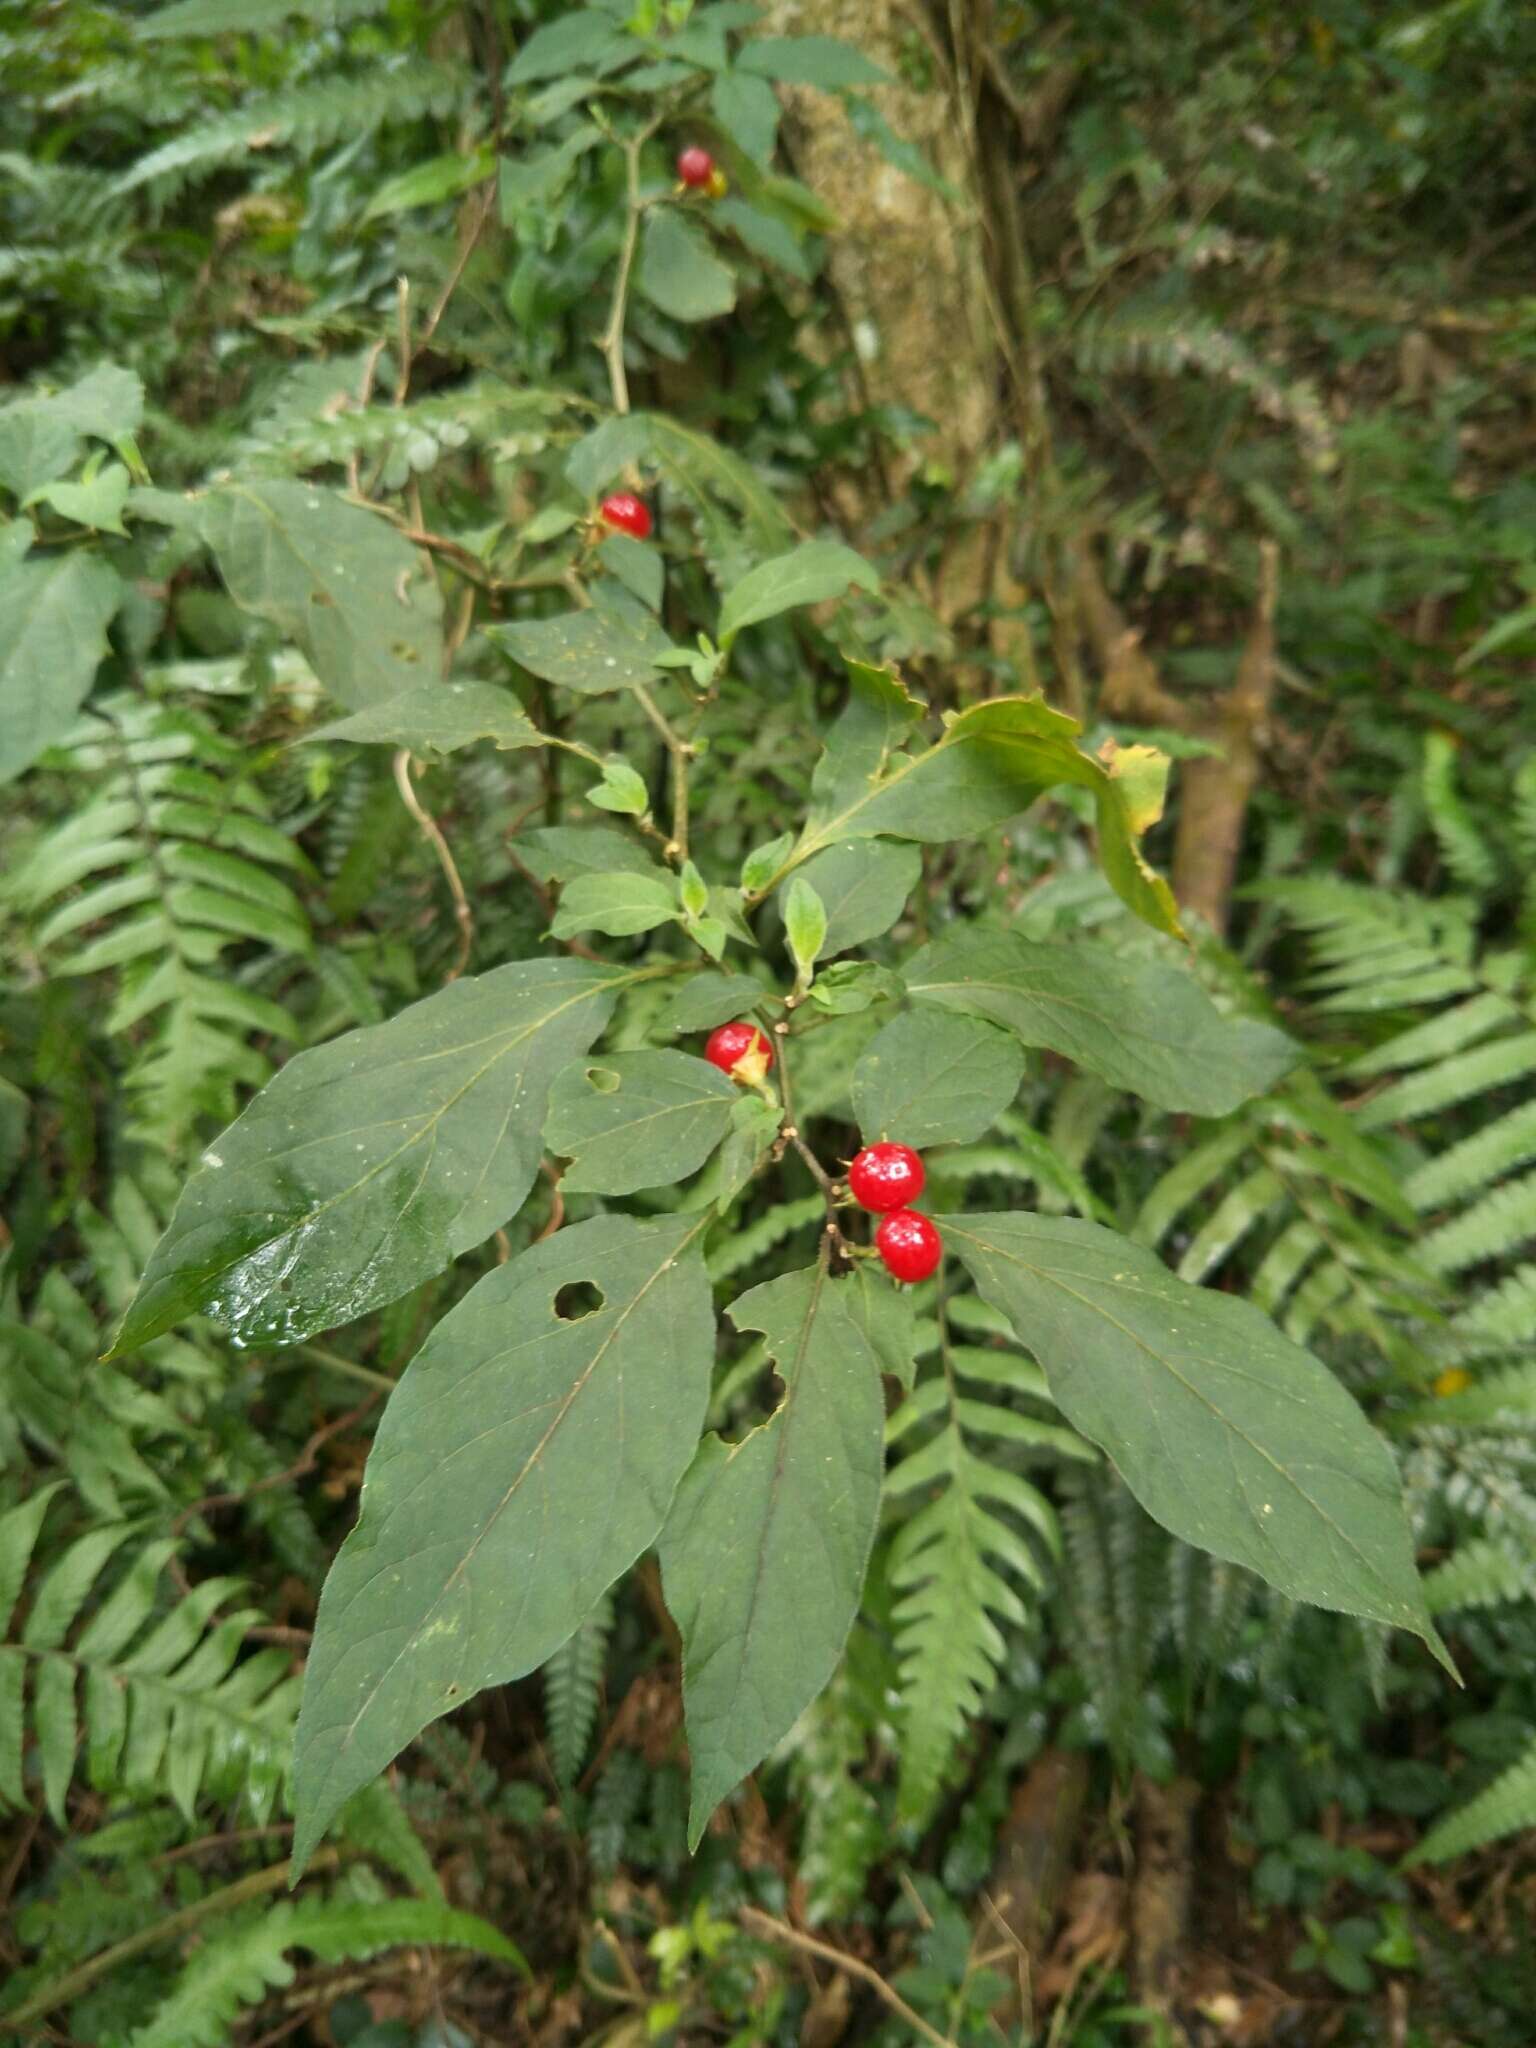 Image of Lycianthes biflora (Loureiro) Bitter